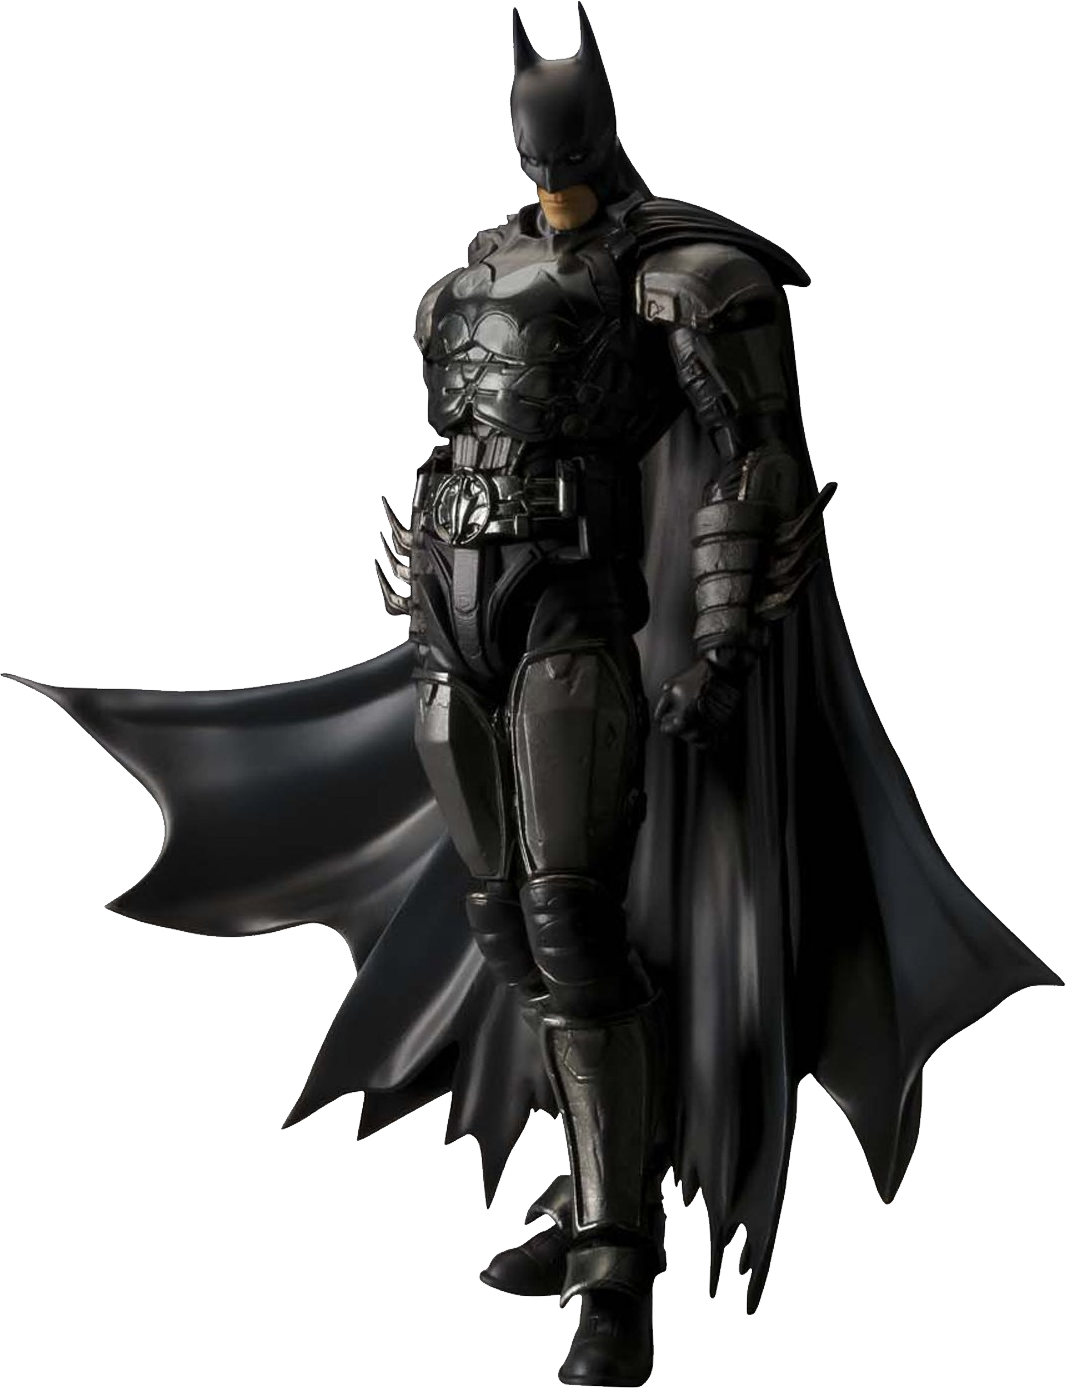 Batman PNG Image with Transparent Background